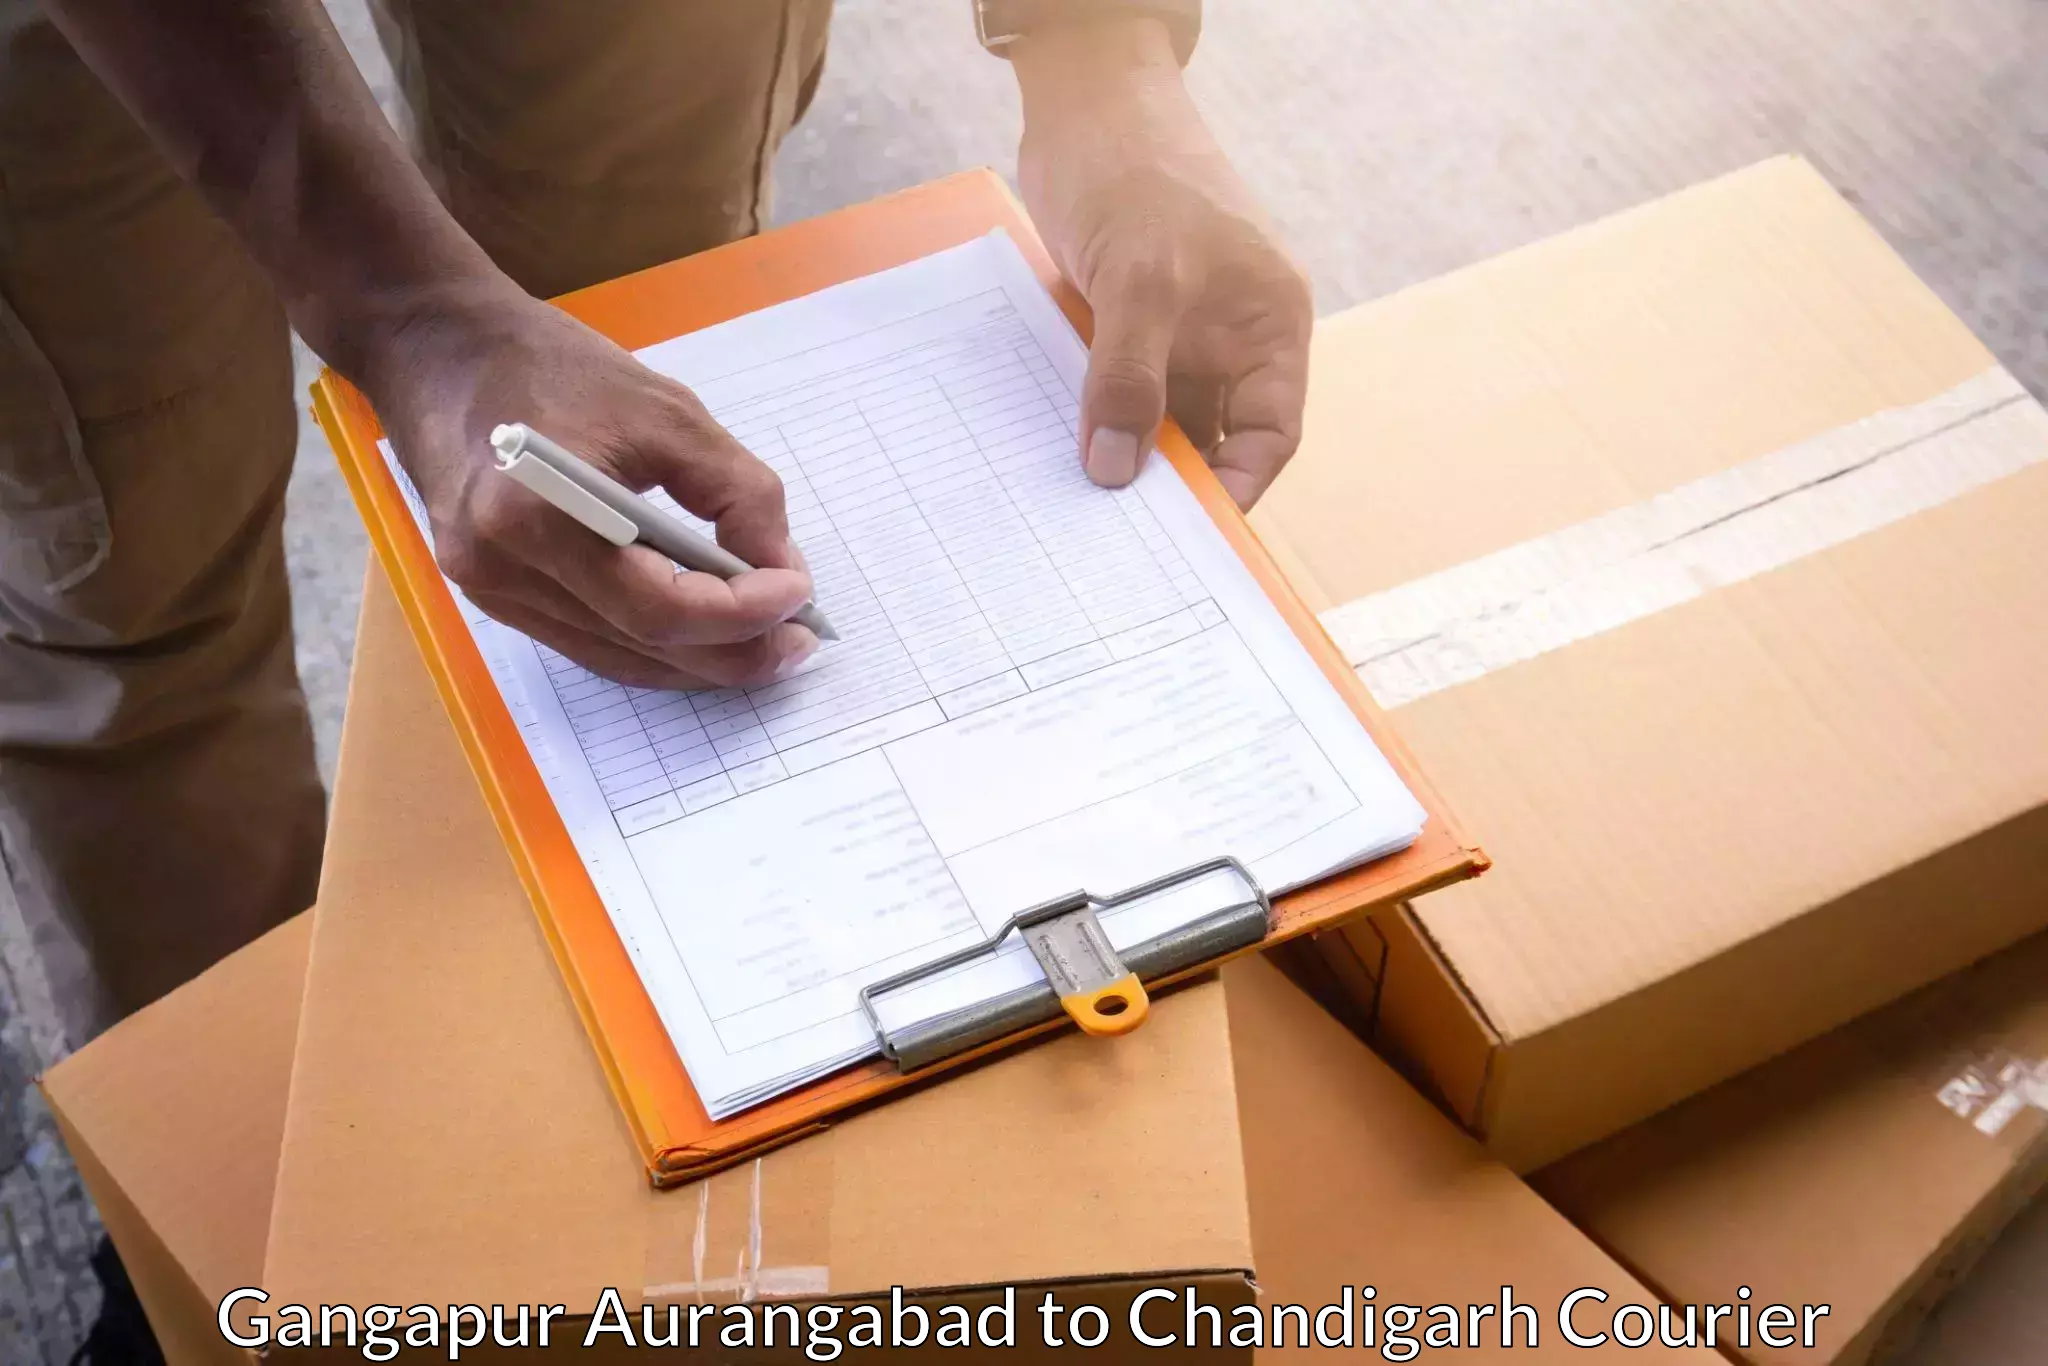 Premium courier solutions Gangapur Aurangabad to Chandigarh